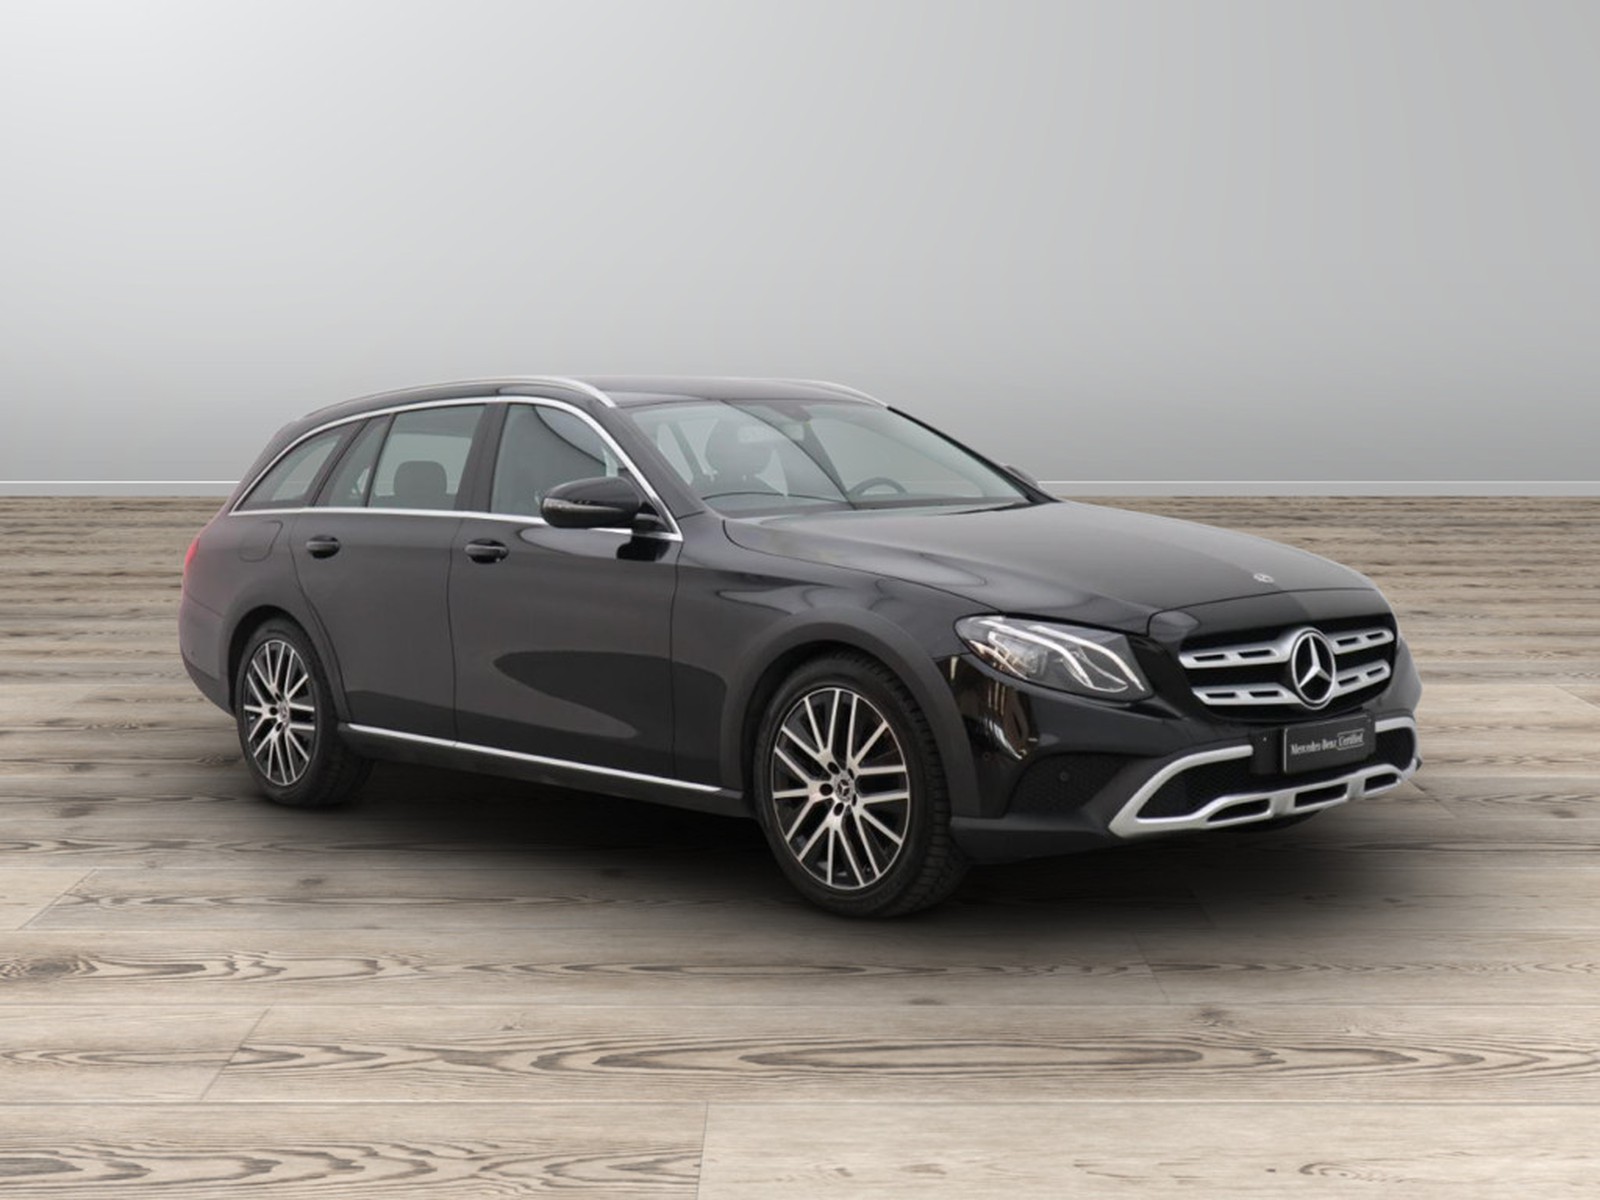 Mercedes Classe A: offerte, caratteristiche e prezzi